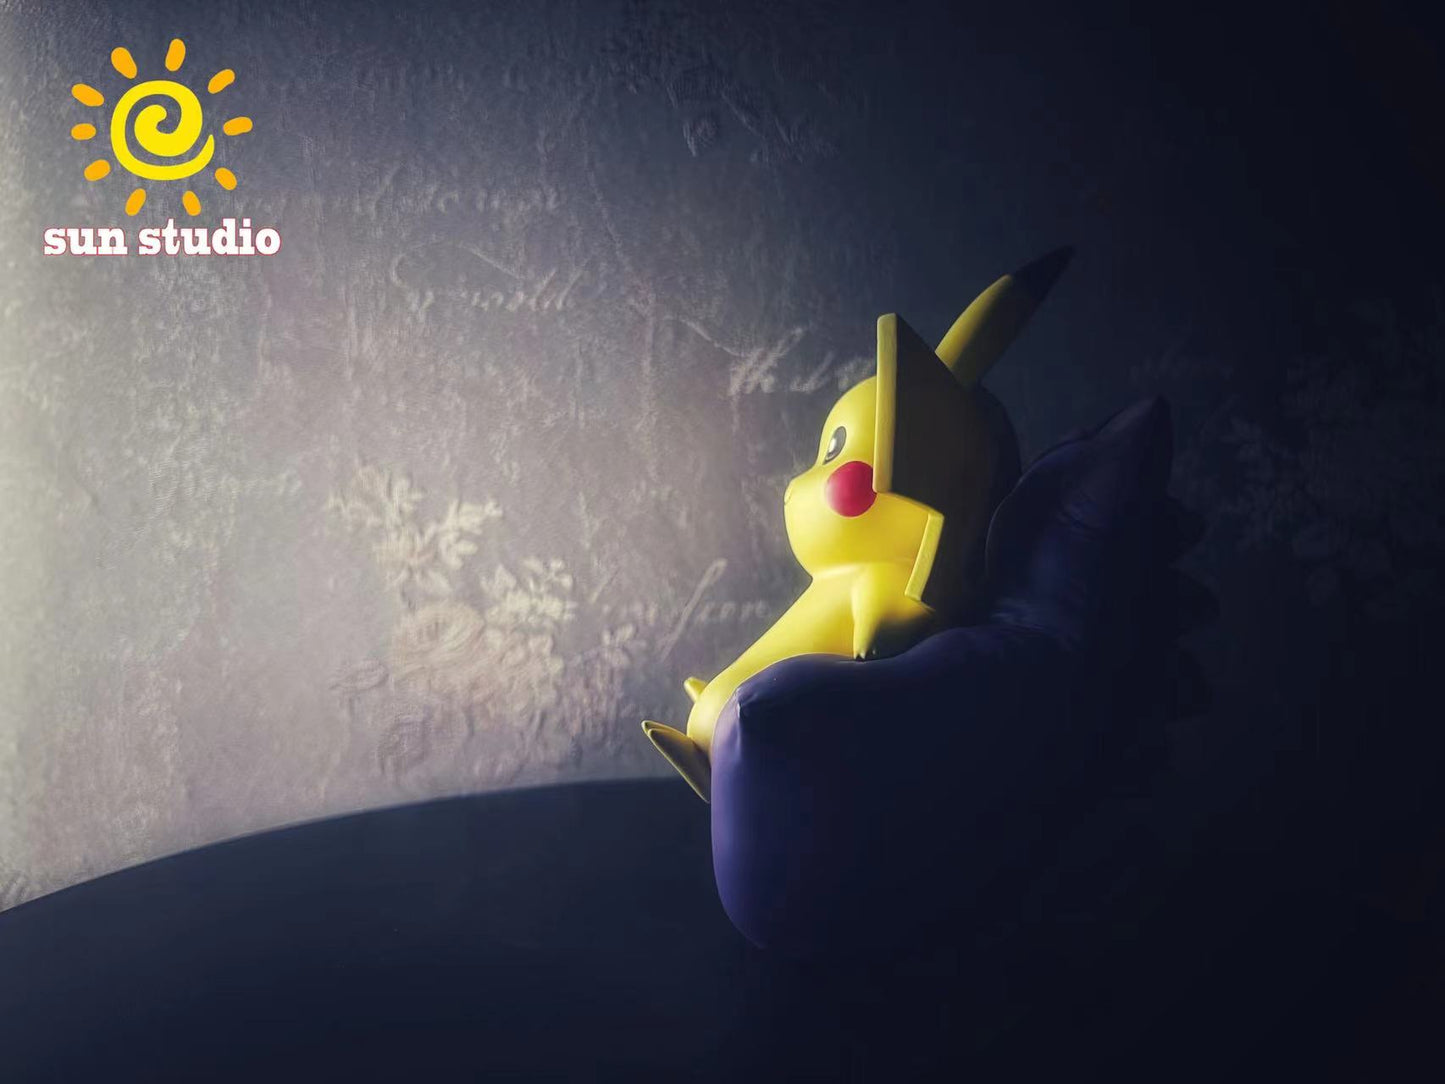 〖Sold Out〗Pokémon Peripheral Products Sofa Pikachu - SUN Studio